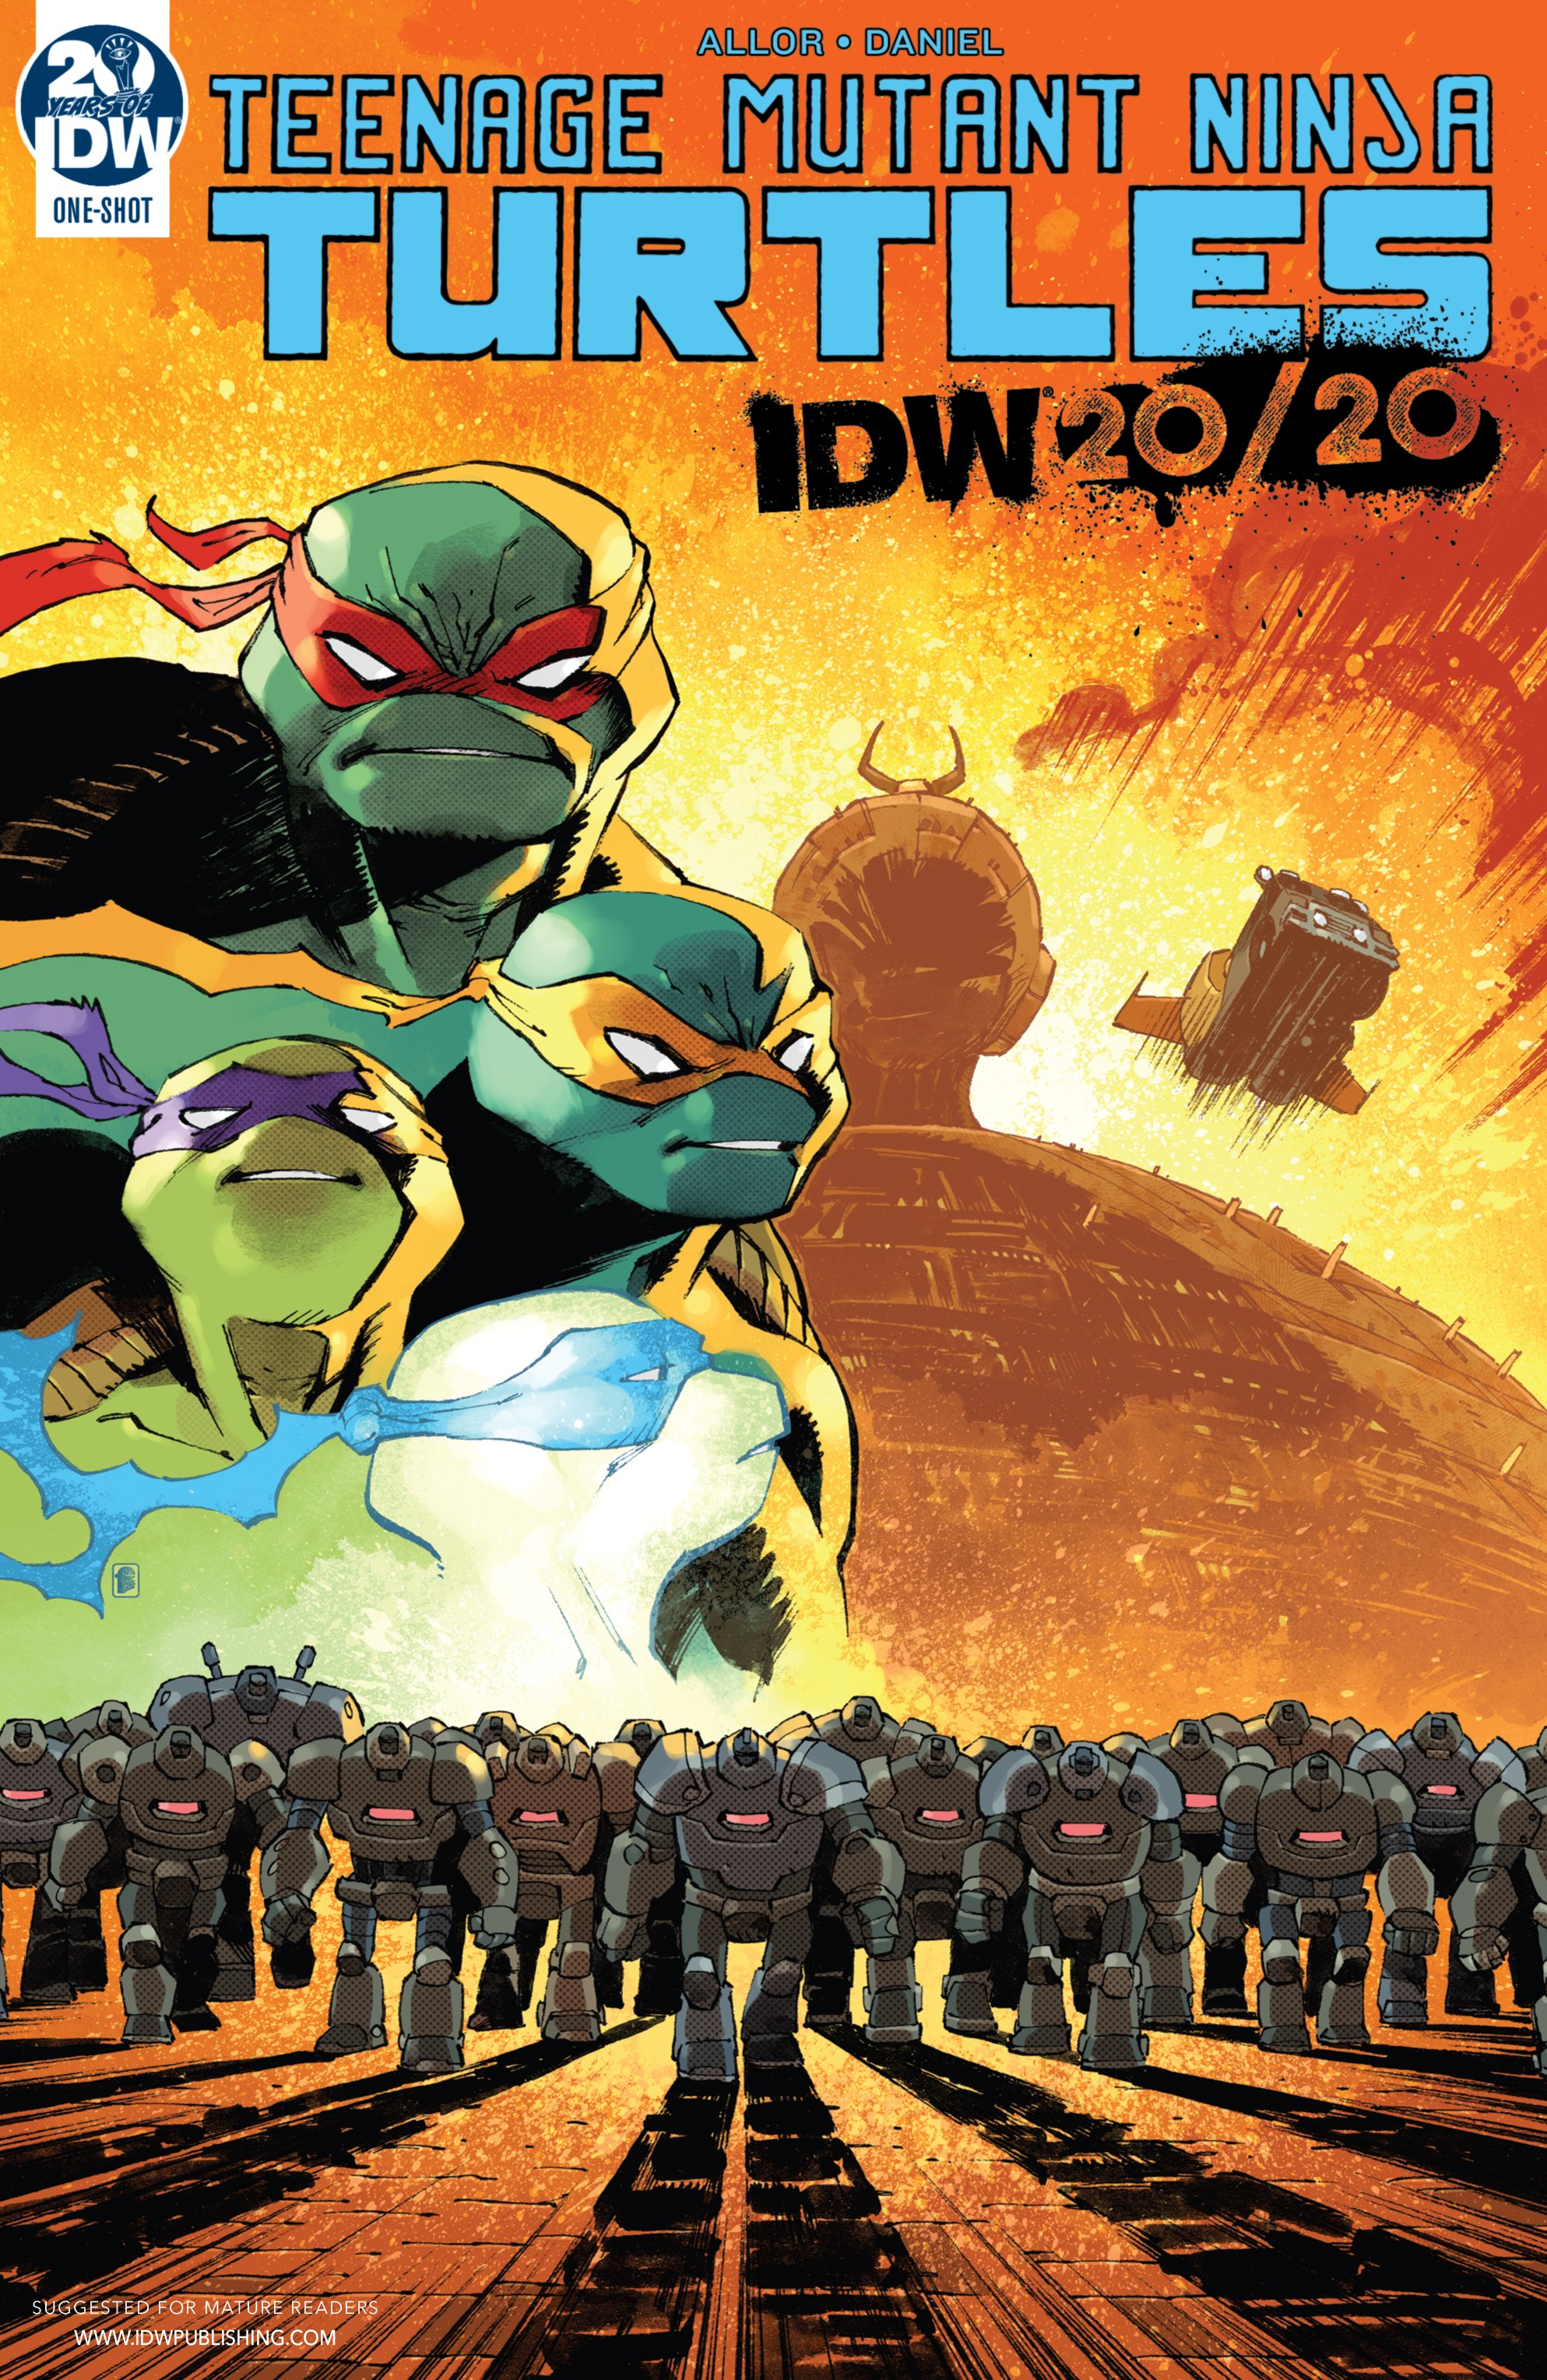 Teenage Mutant Ninja Turtles: IDW 20/20 (2019): Chapter 1 - Page 1